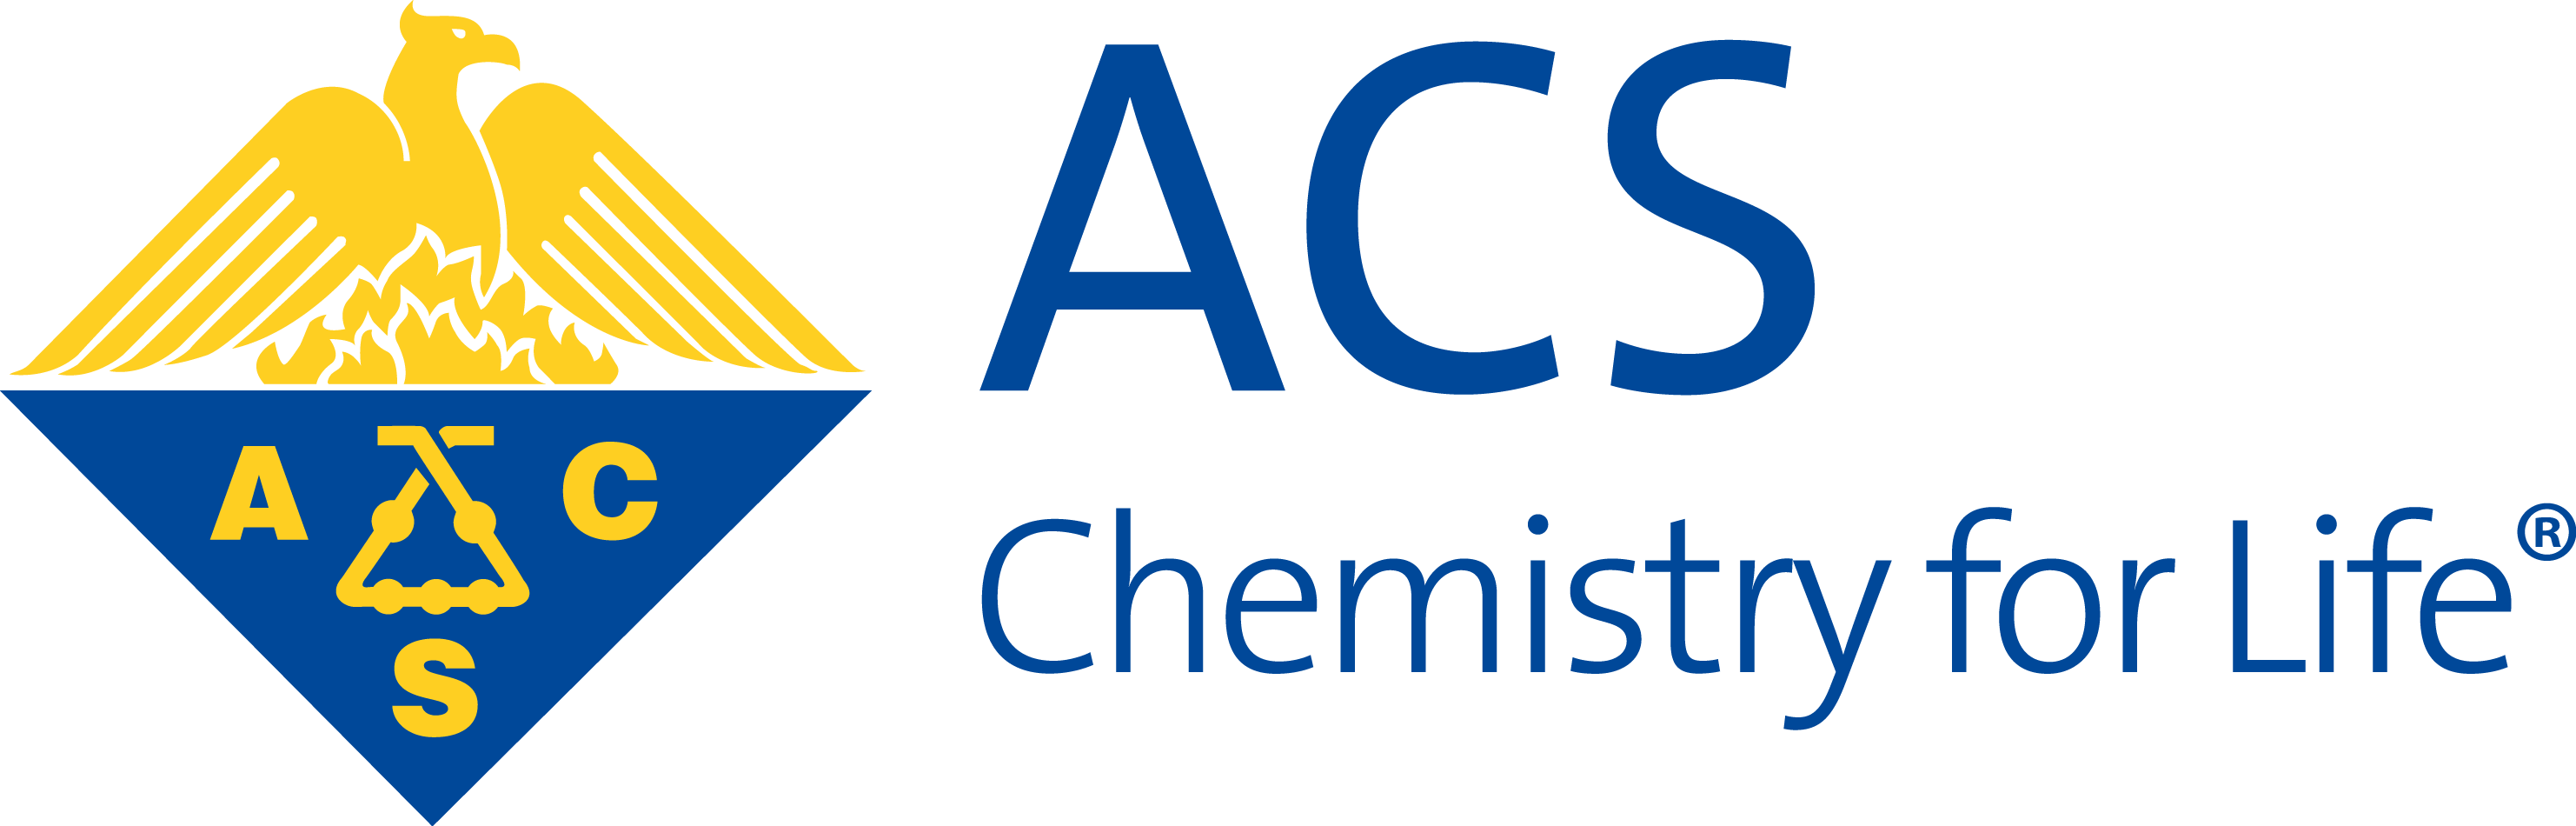 ACS Logo   American Chemical Society png